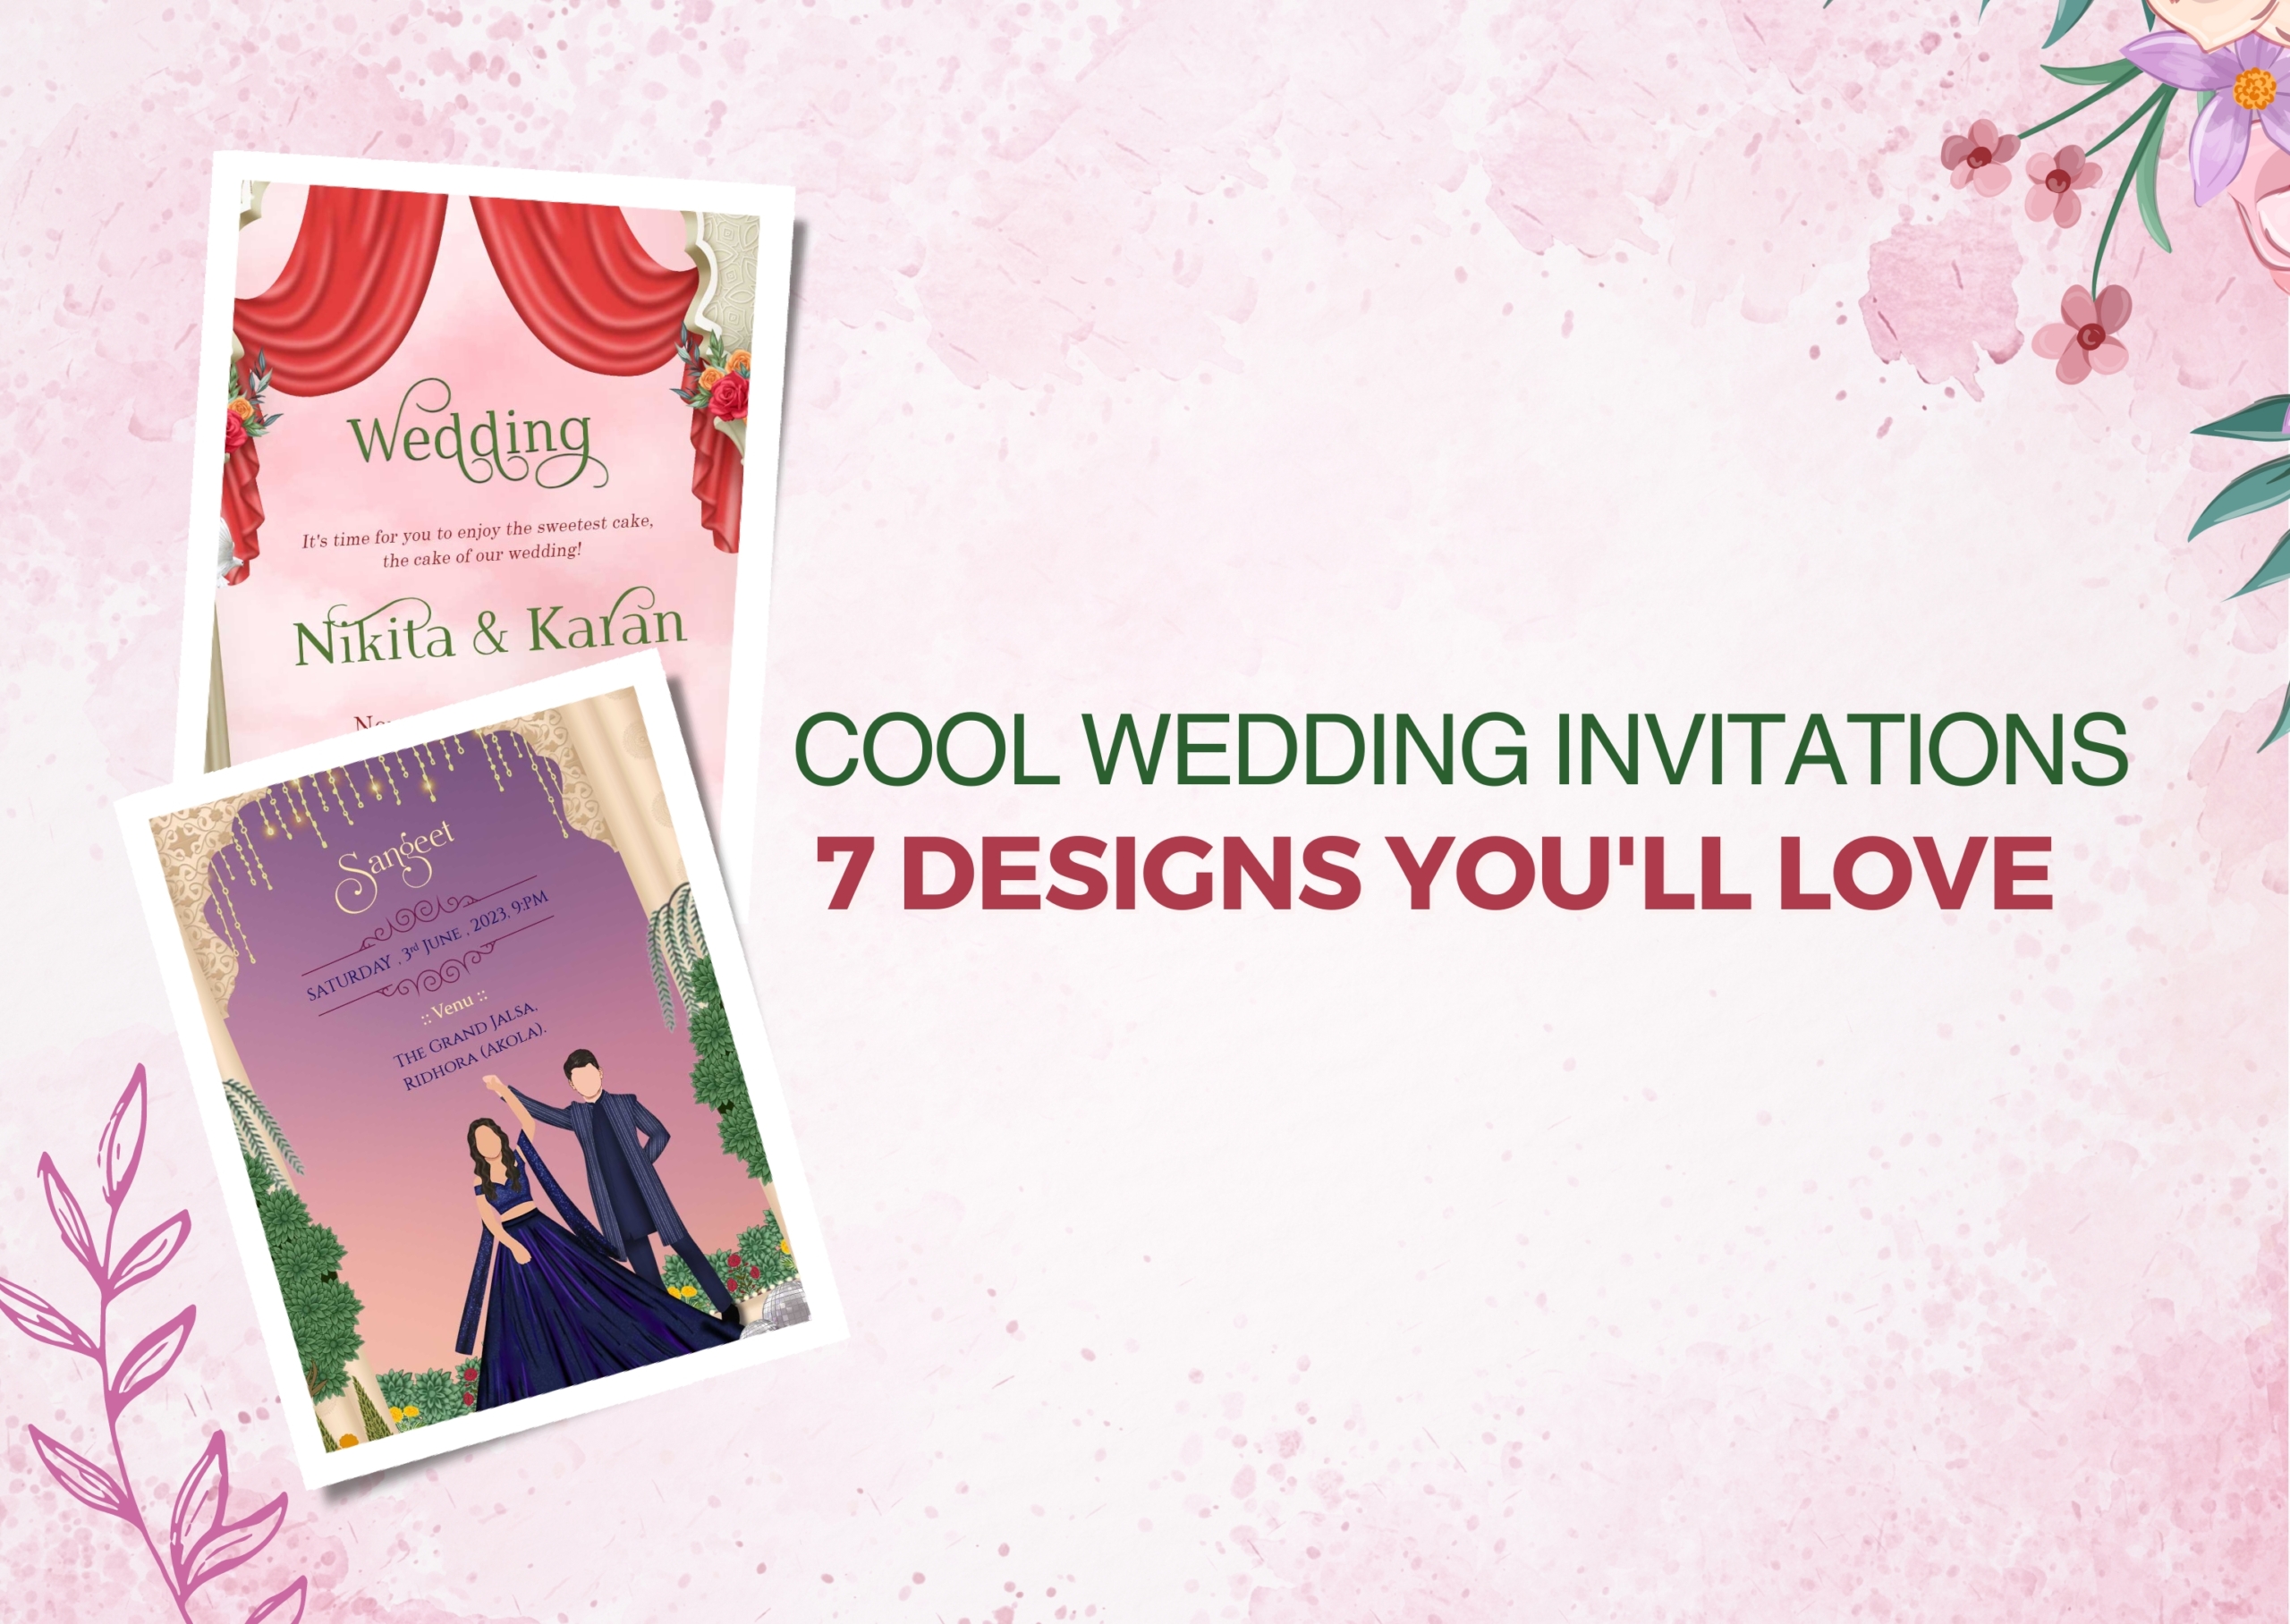 Cool Wedding Invitations: 7 Designs You’ll Love